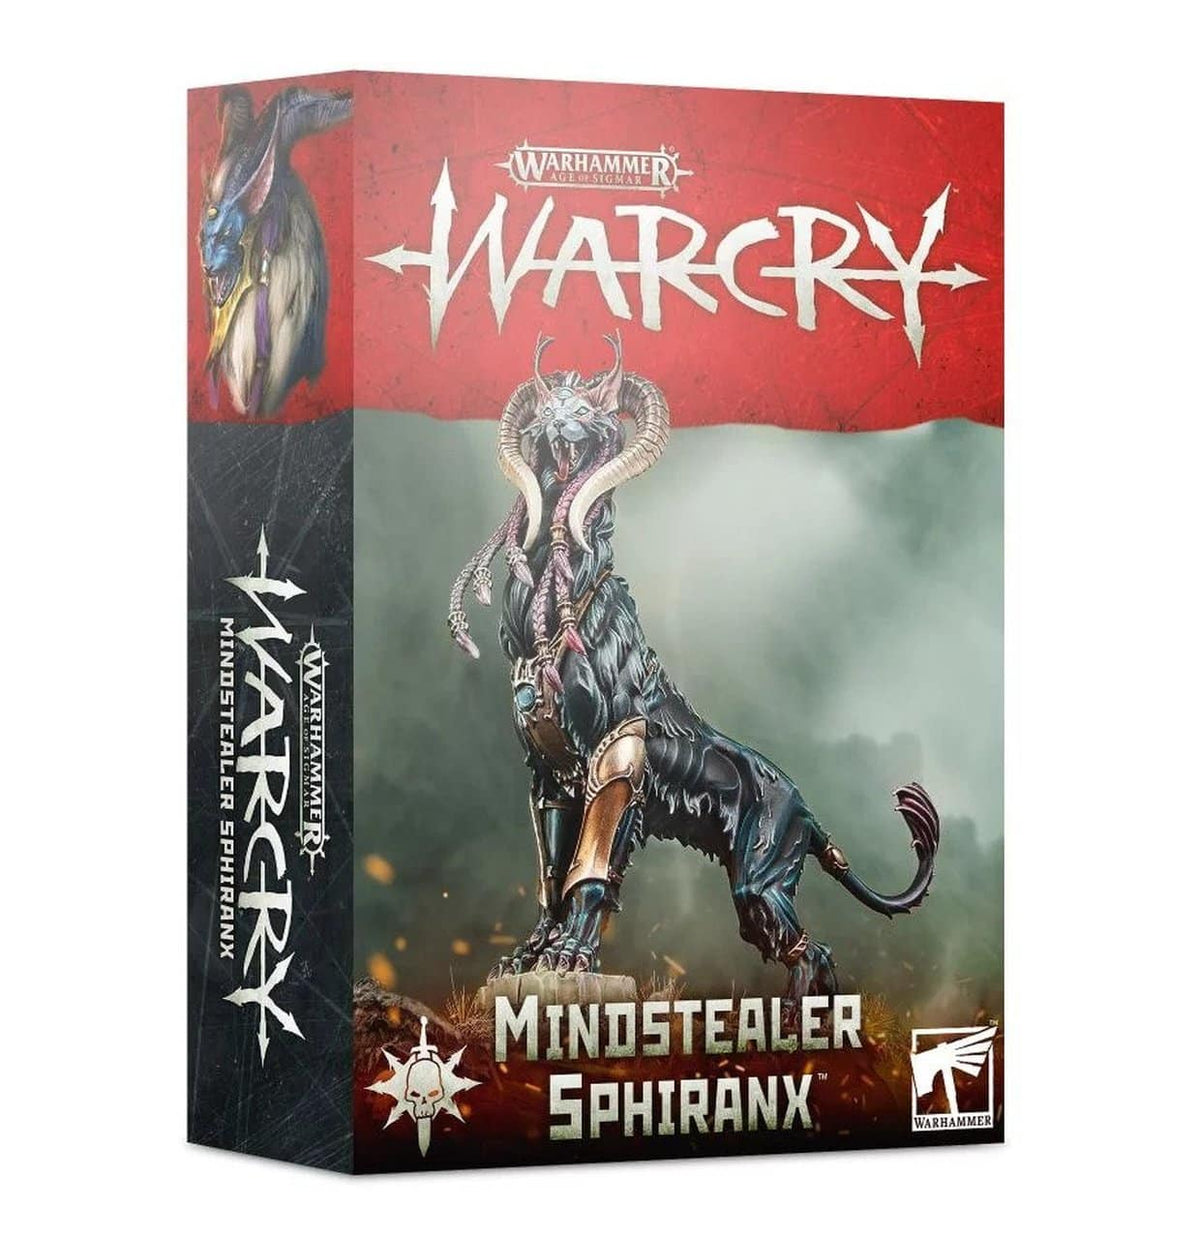 Warcry -  Mindstealer Sphiranx